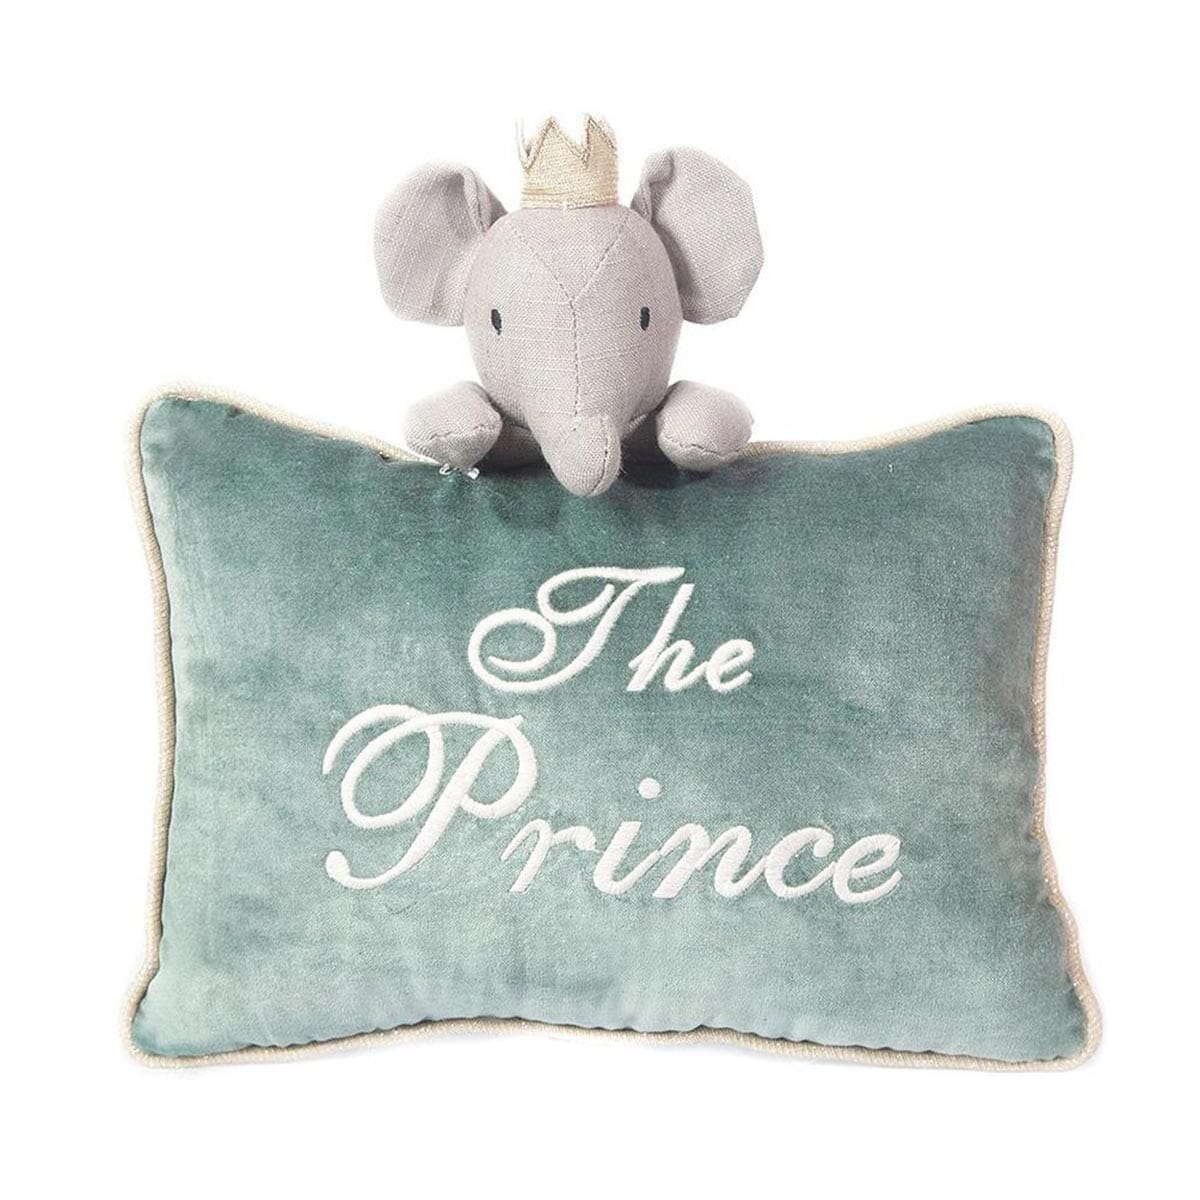 The Prince Accent Pillow Elroy the Elephant Nursery Decor Mon Ami Green 